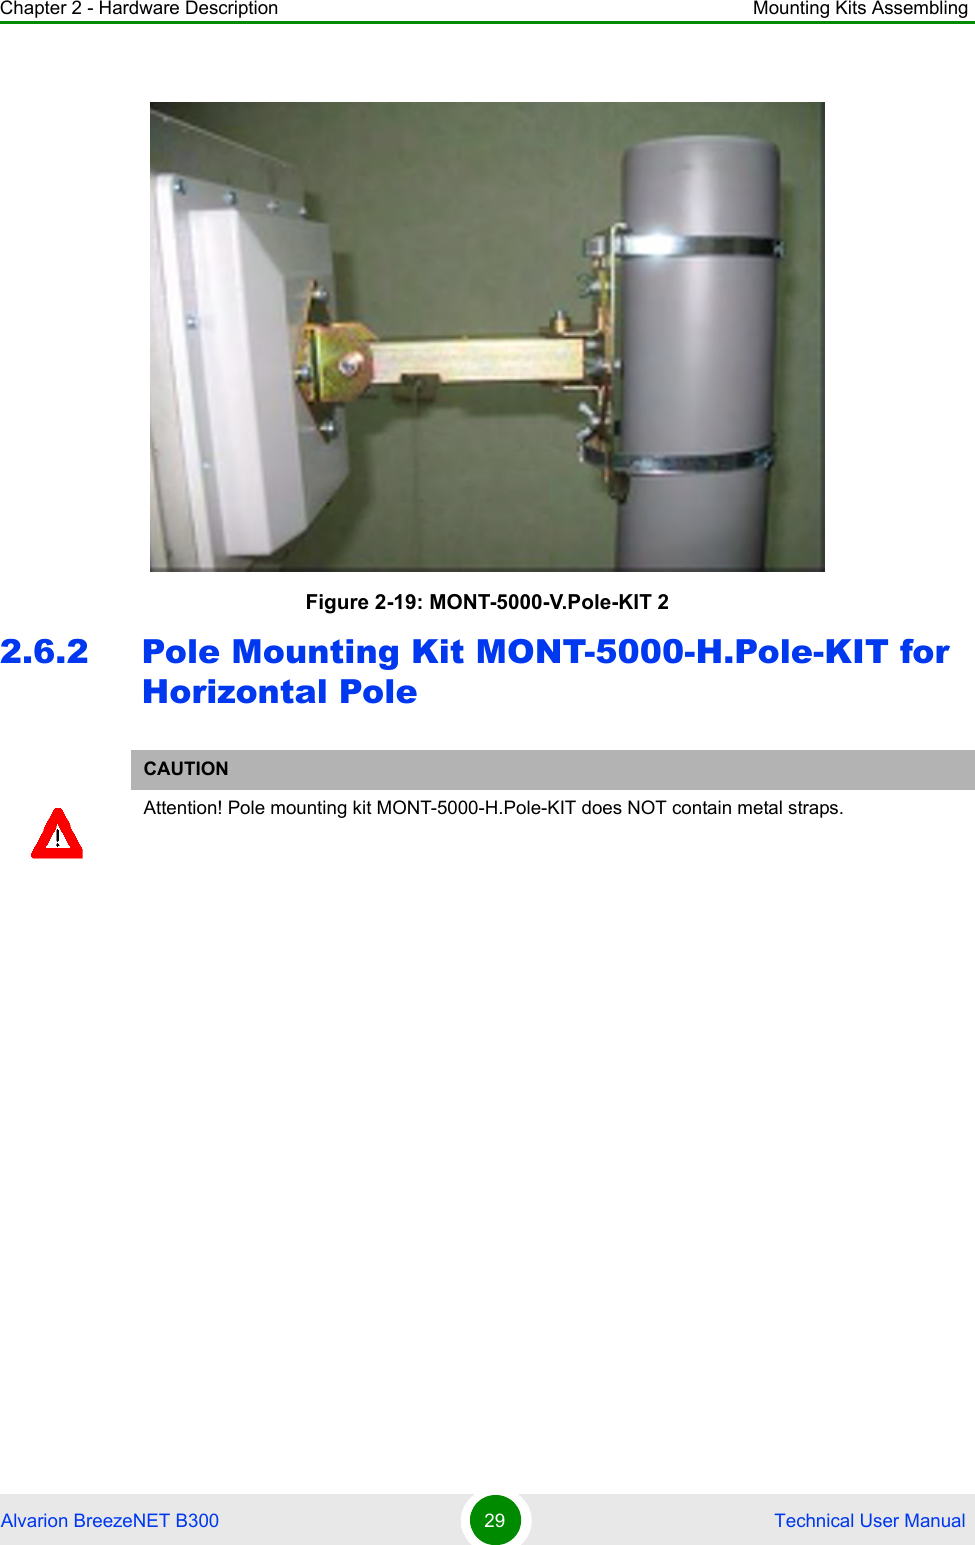 Chapter 2 - Hardware Description Mounting Kits AssemblingAlvarion BreezeNET B300 29  Technical User Manual2.6.2 Pole Mounting Kit MONT-5000-H.Pole-KIT for Horizontal PoleFigure 2-19: MONT-5000-V.Pole-KIT 2CAUTIONAttention! Pole mounting kit MONT-5000-H.Pole-KIT does NOT contain metal straps.